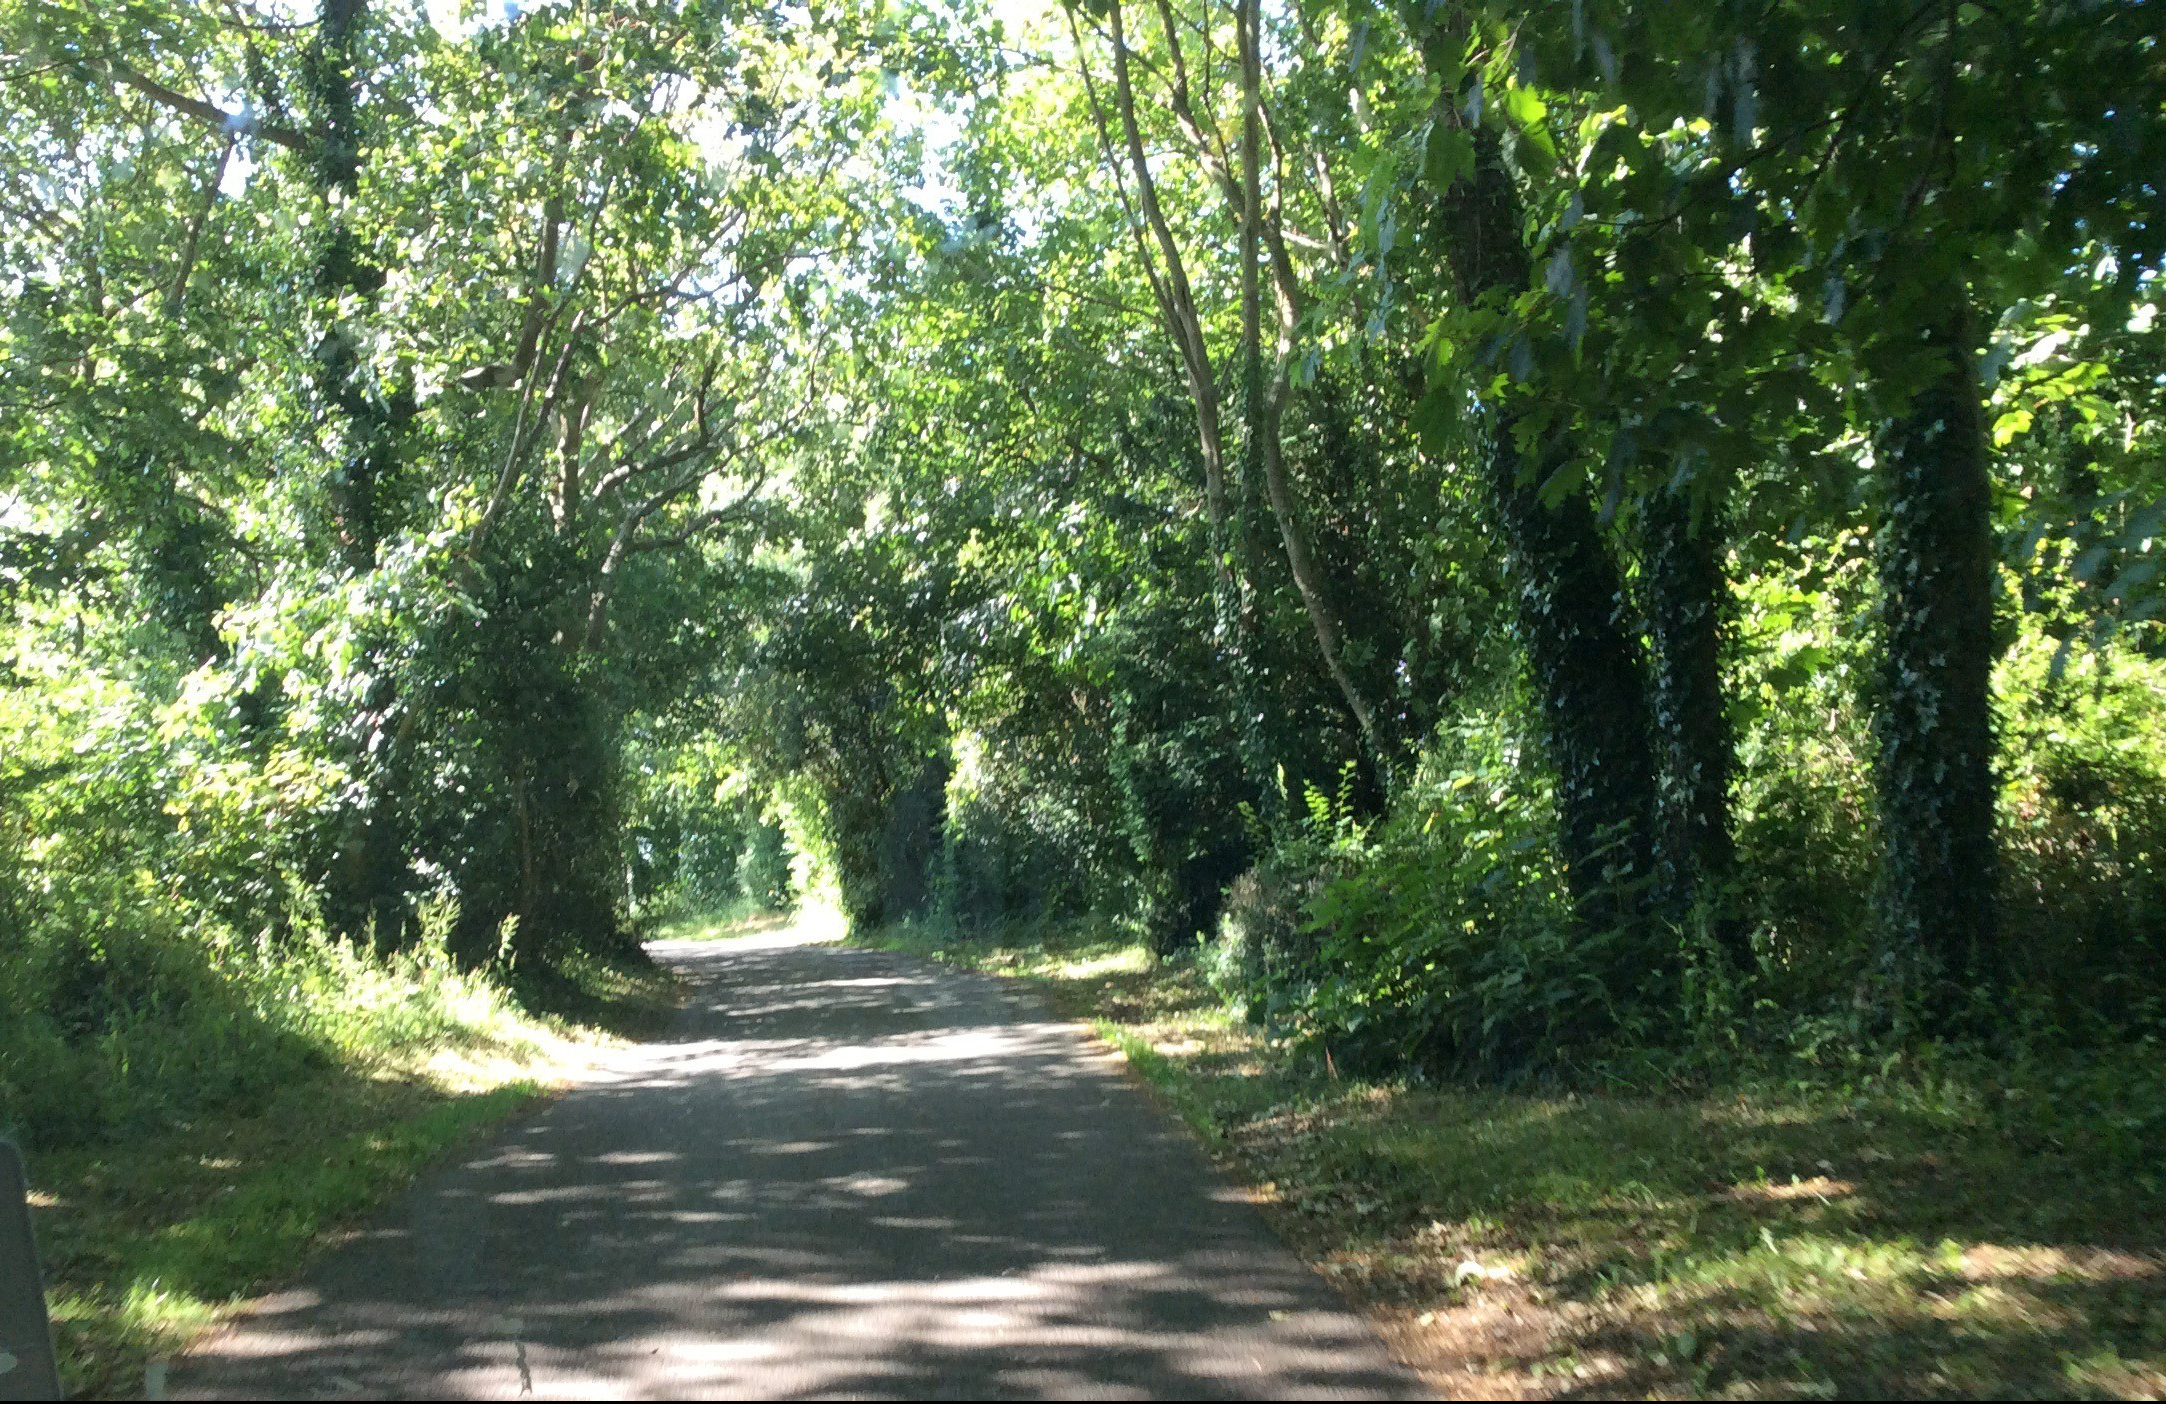 A lane through the woods